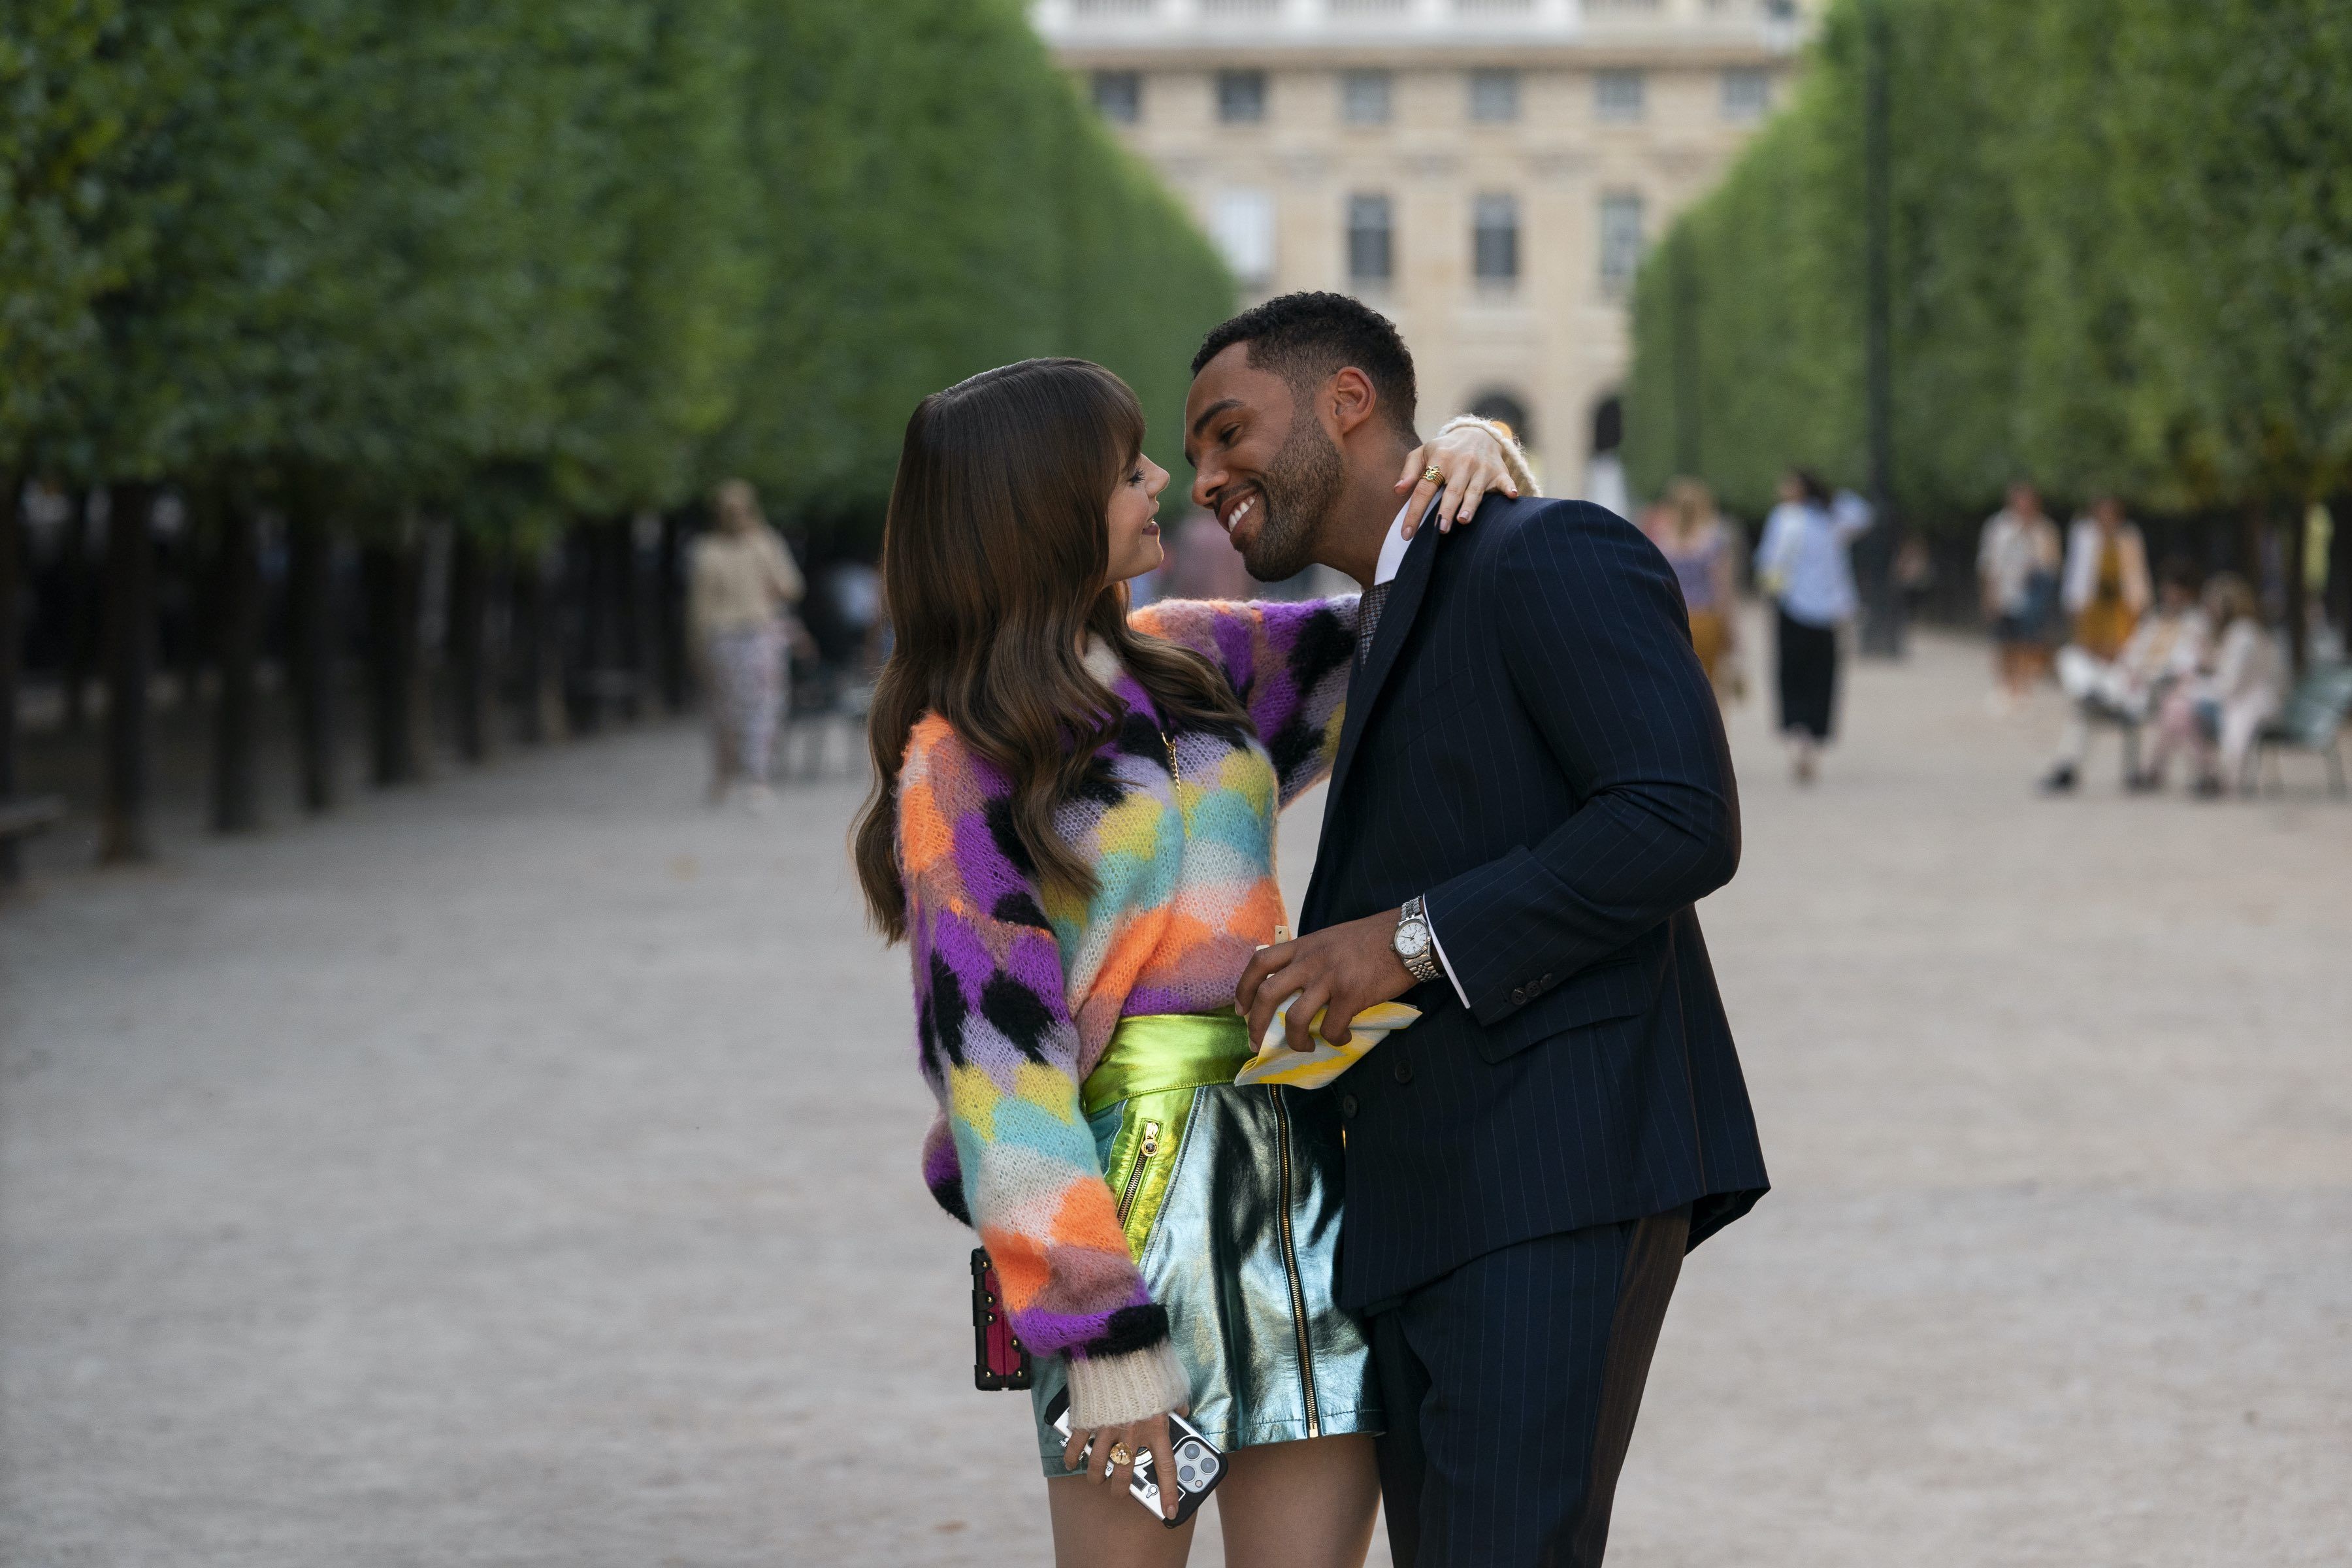 Emily in Paris Season Three: Everything You Need To Know